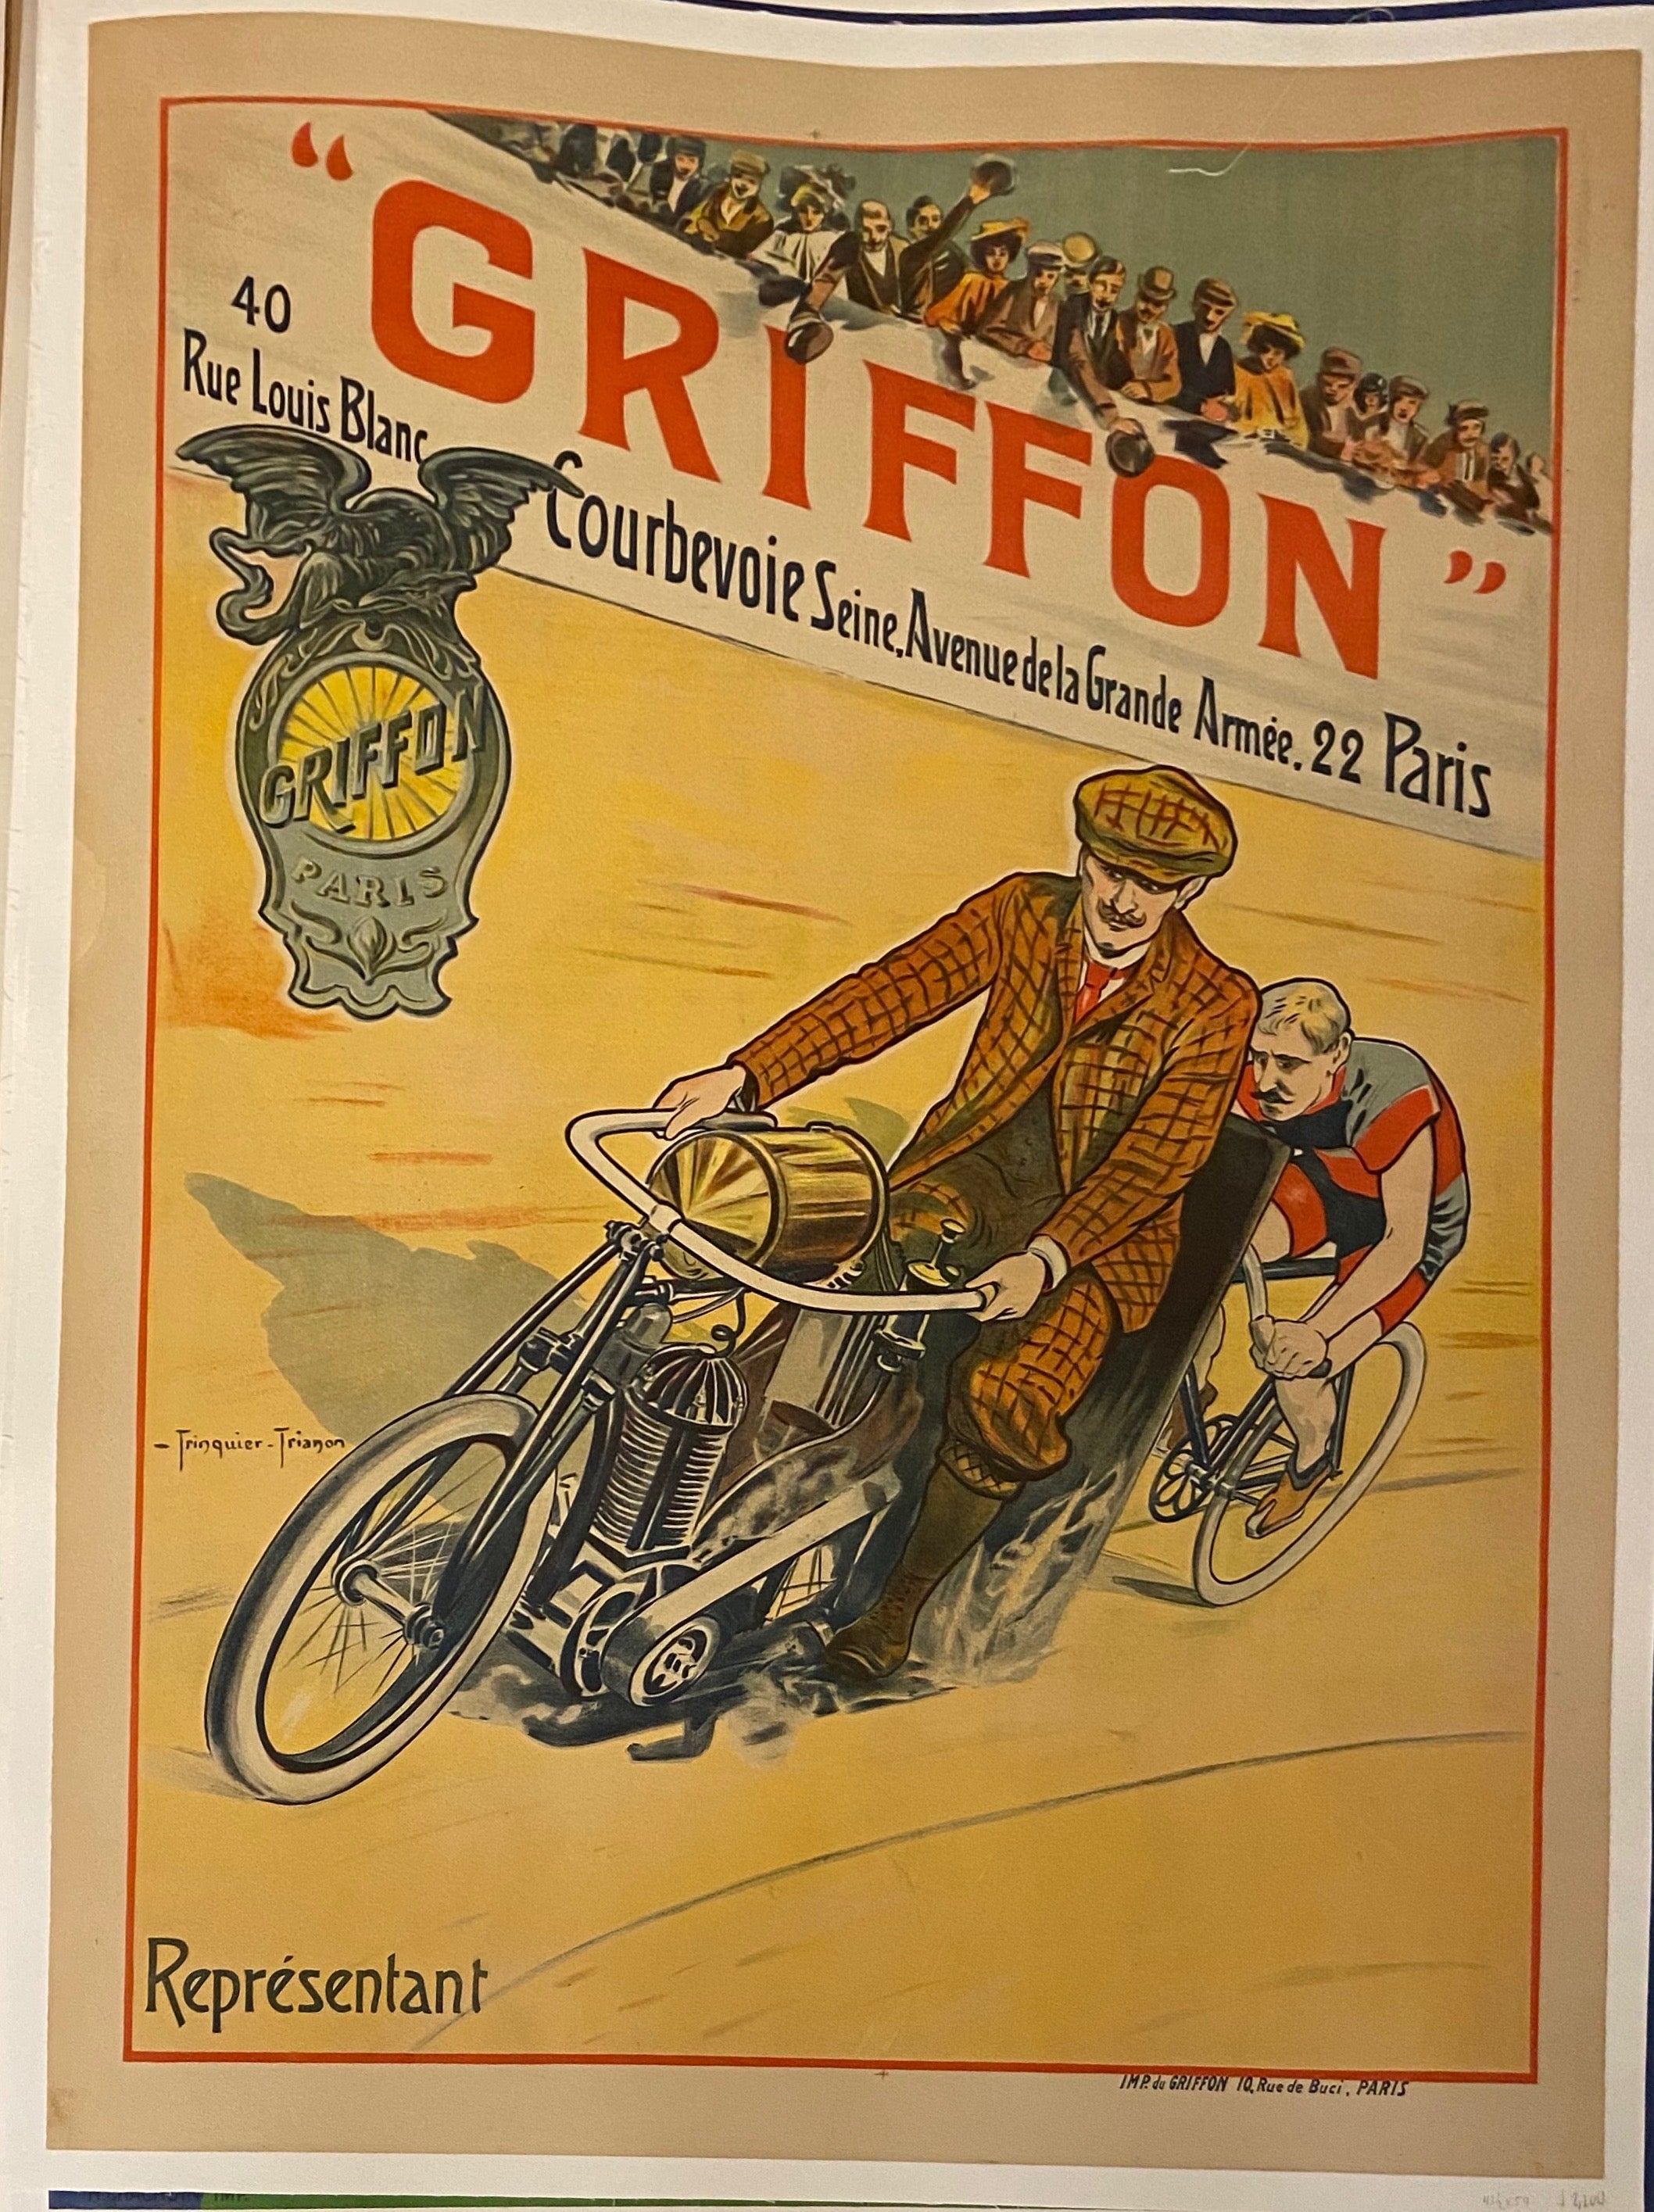 Original vintage poster RAZZIA - Automobiles Classics et Louis